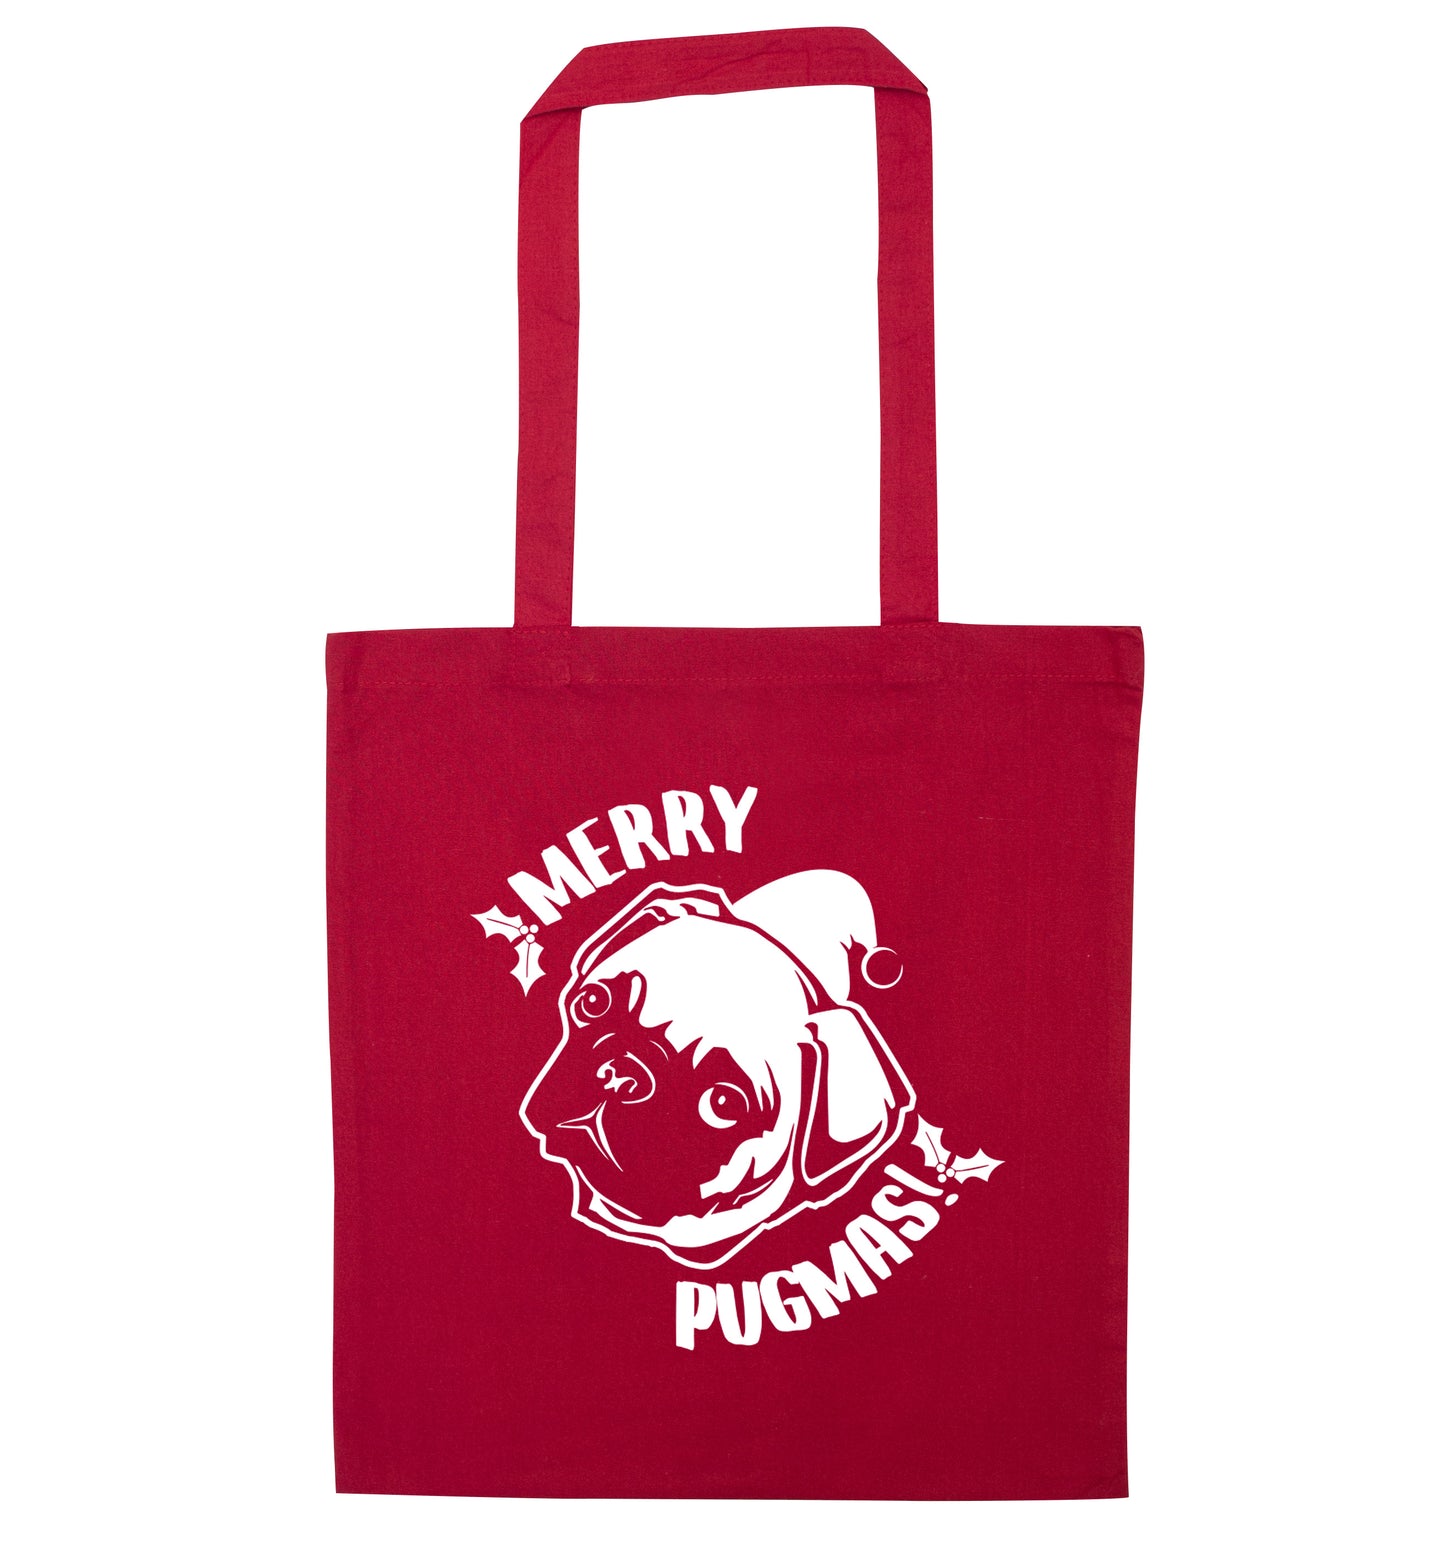 Merry Pugmas red tote bag